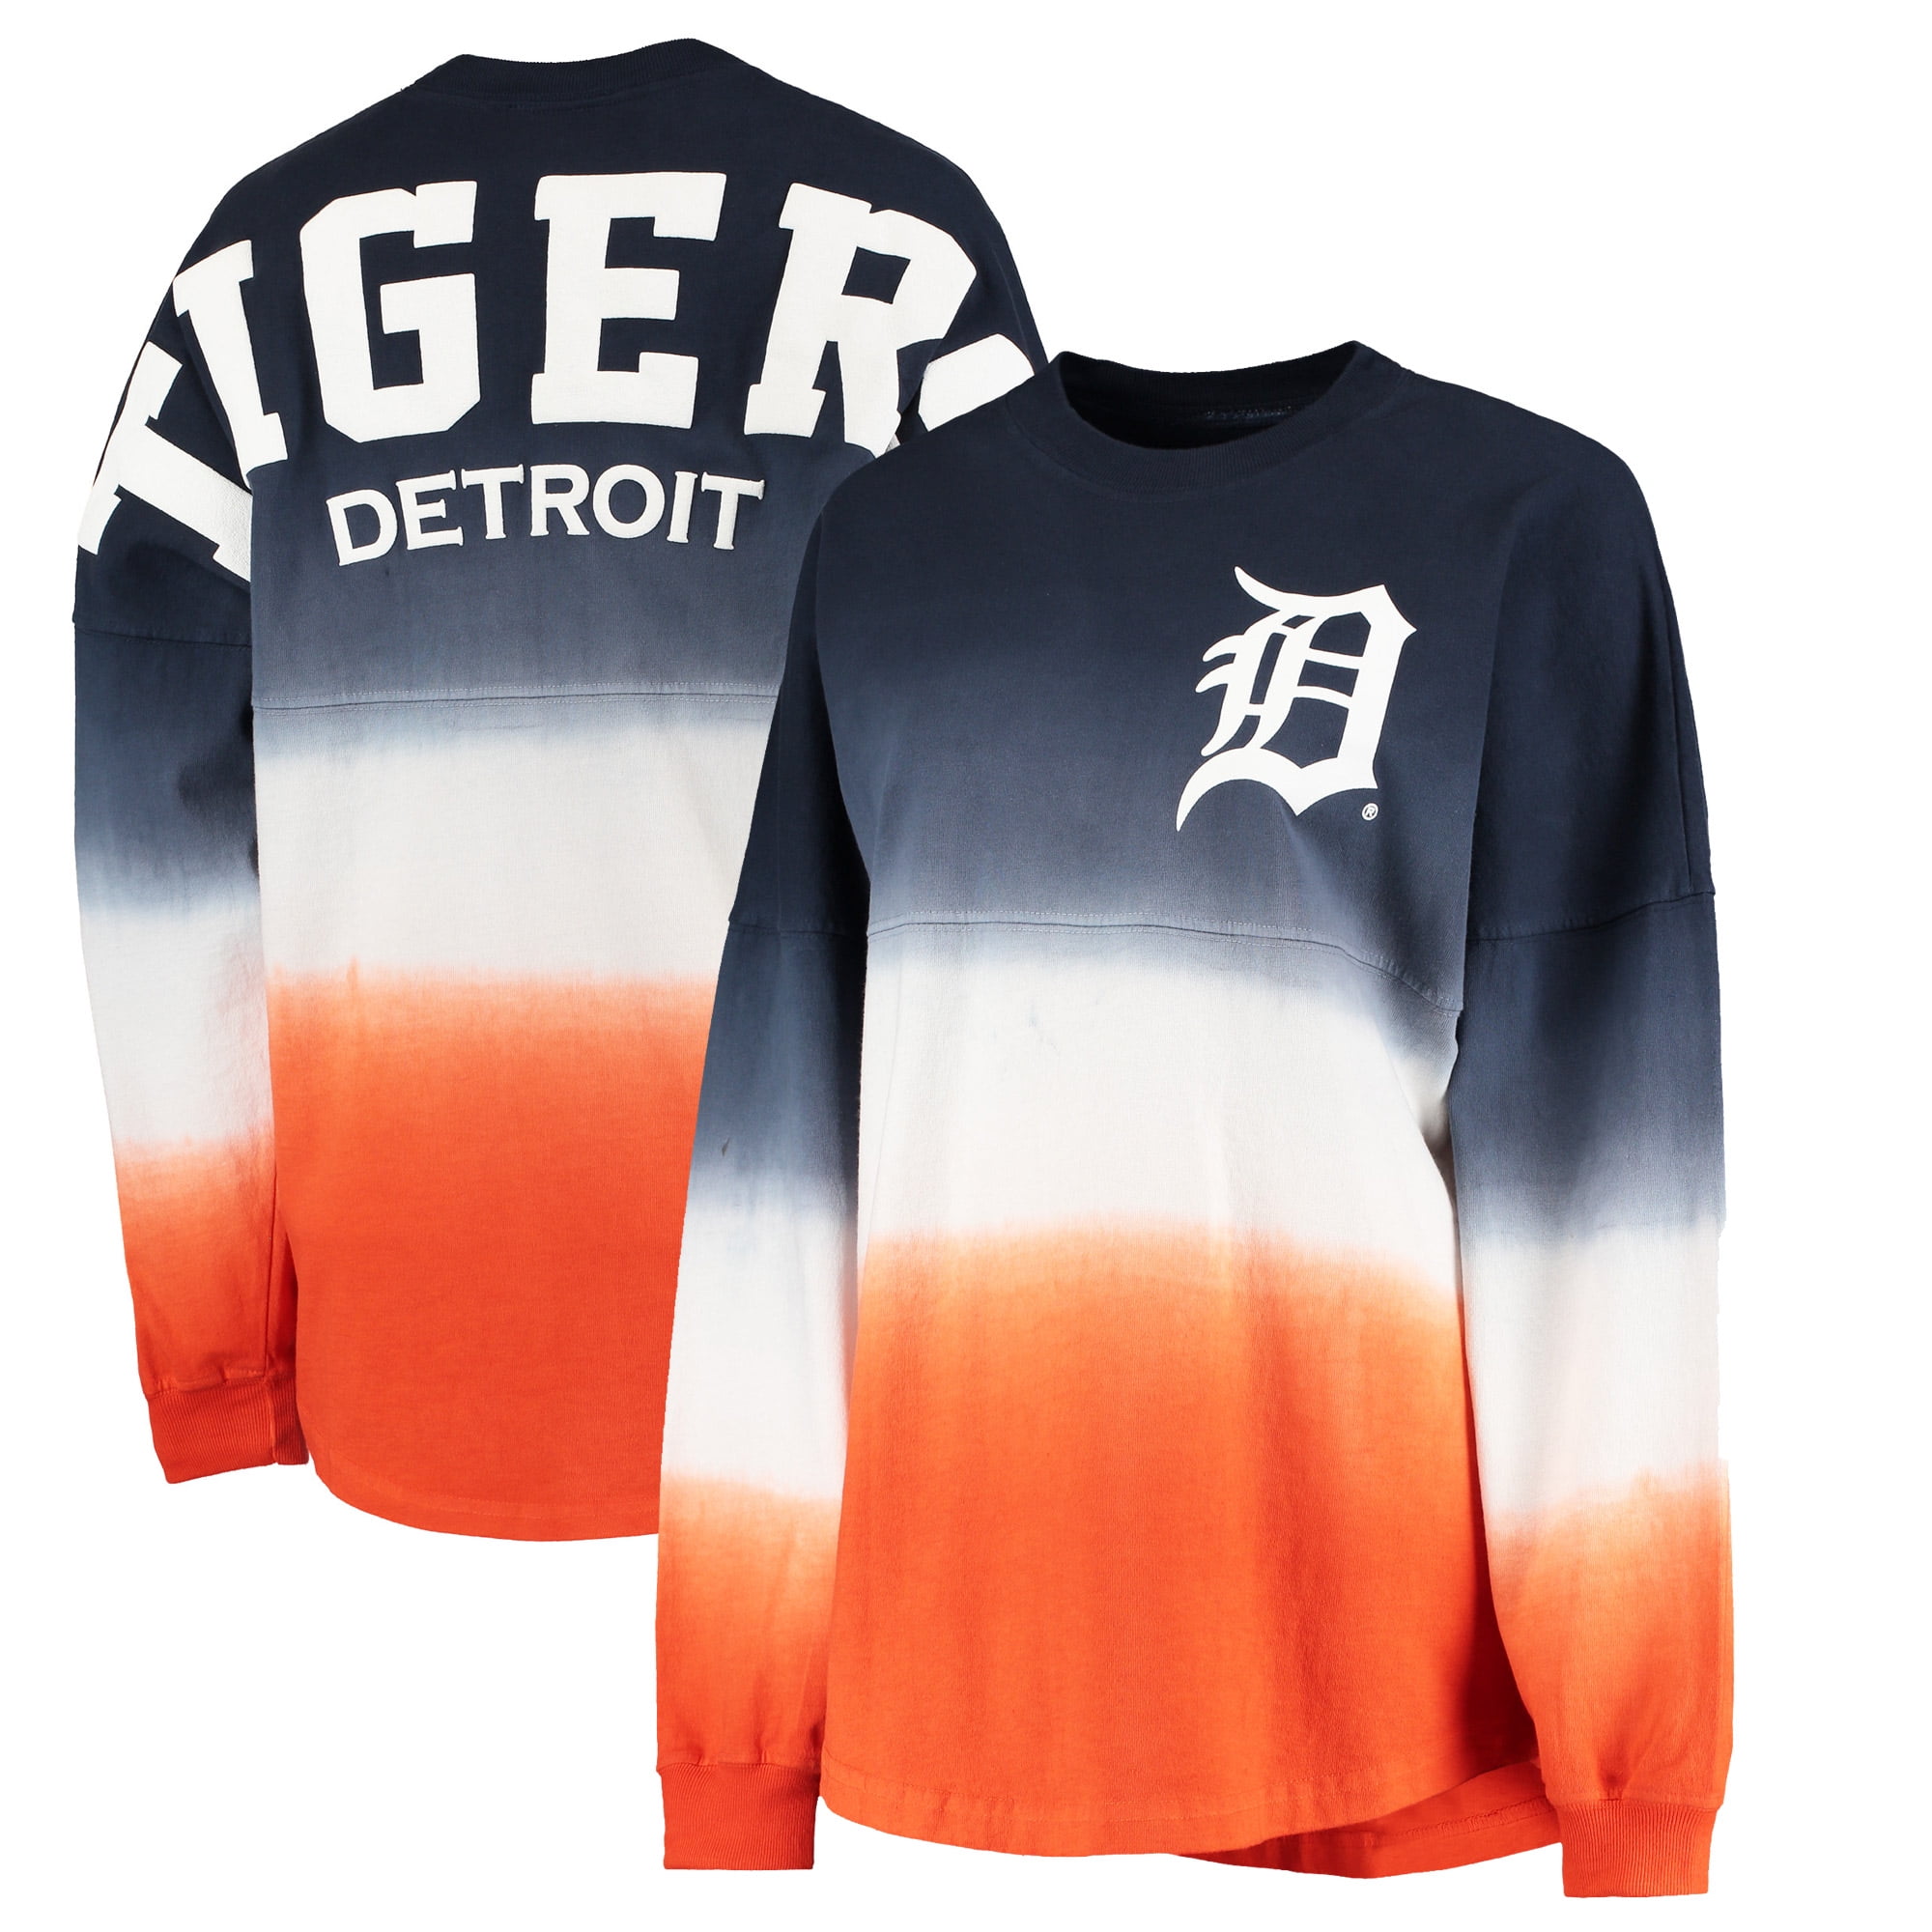 detroit tigers shirt women's